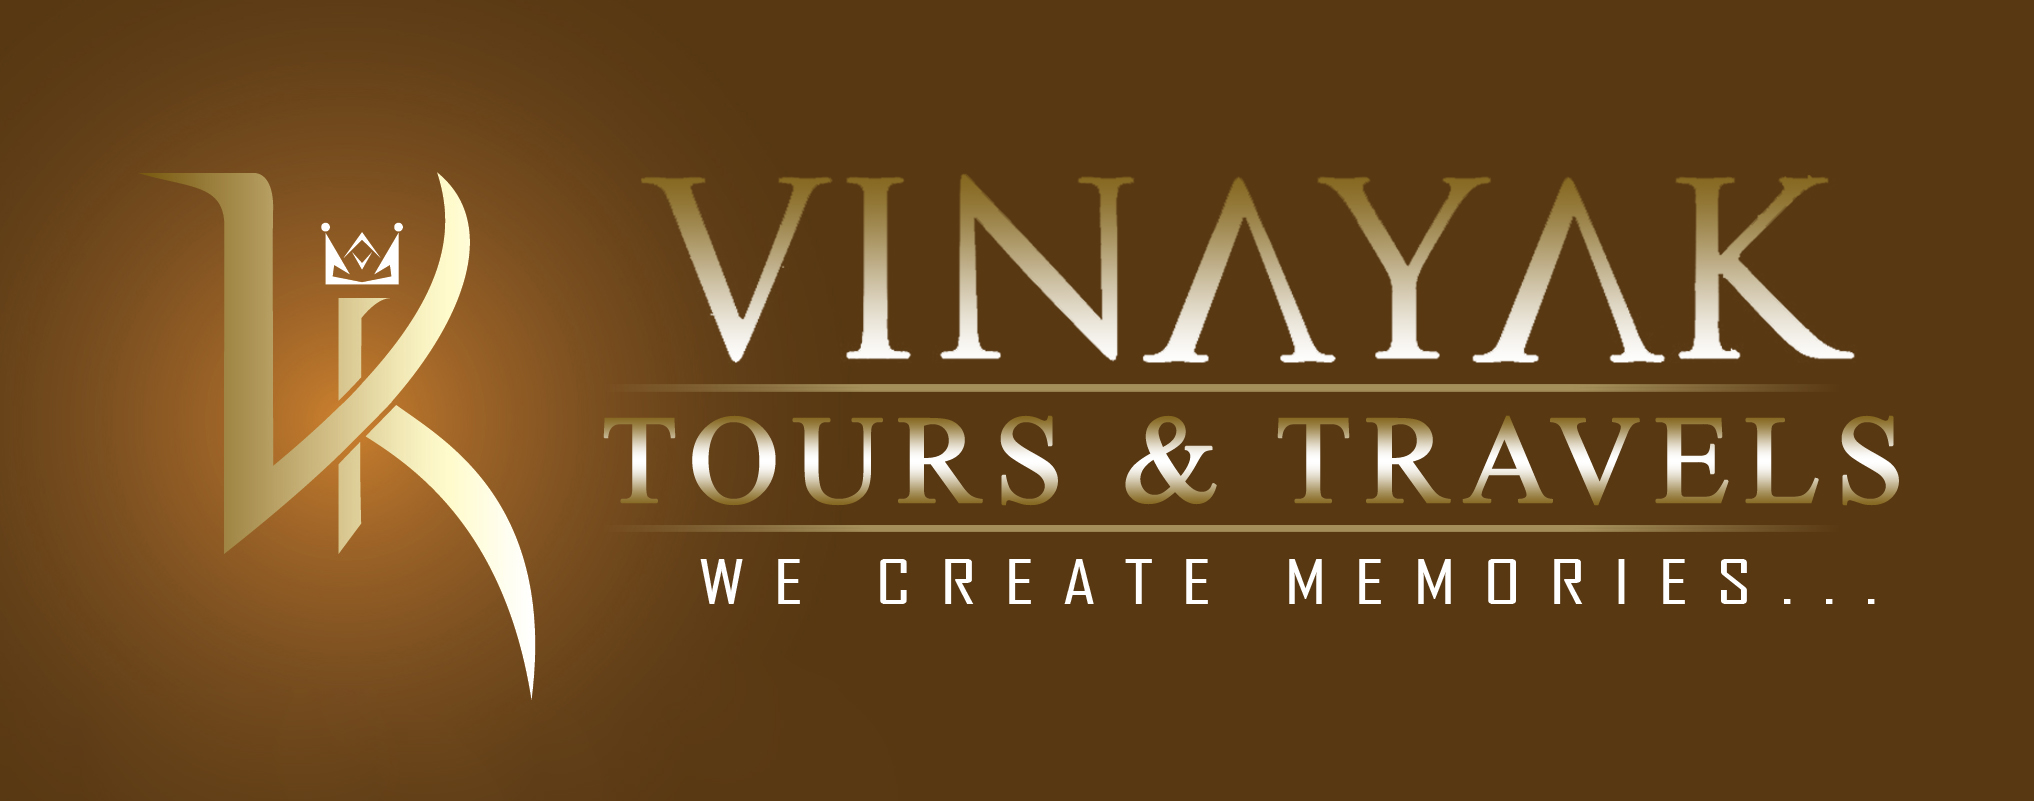 Vinayak Tours and Travels